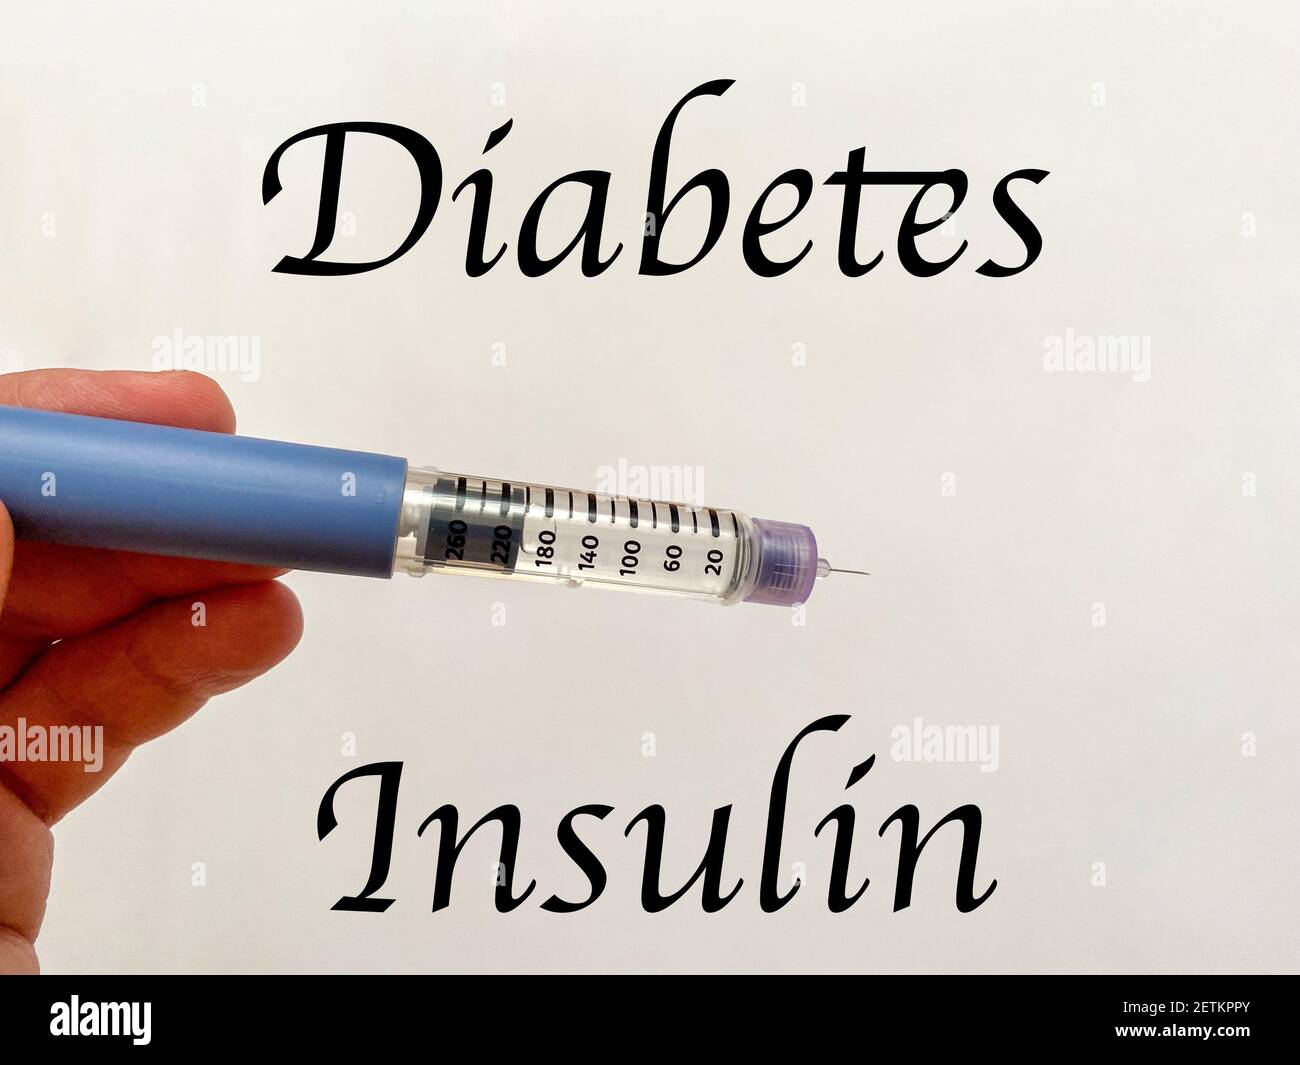 Siringa-penna per insulina in mano su sfondo bianco isolato